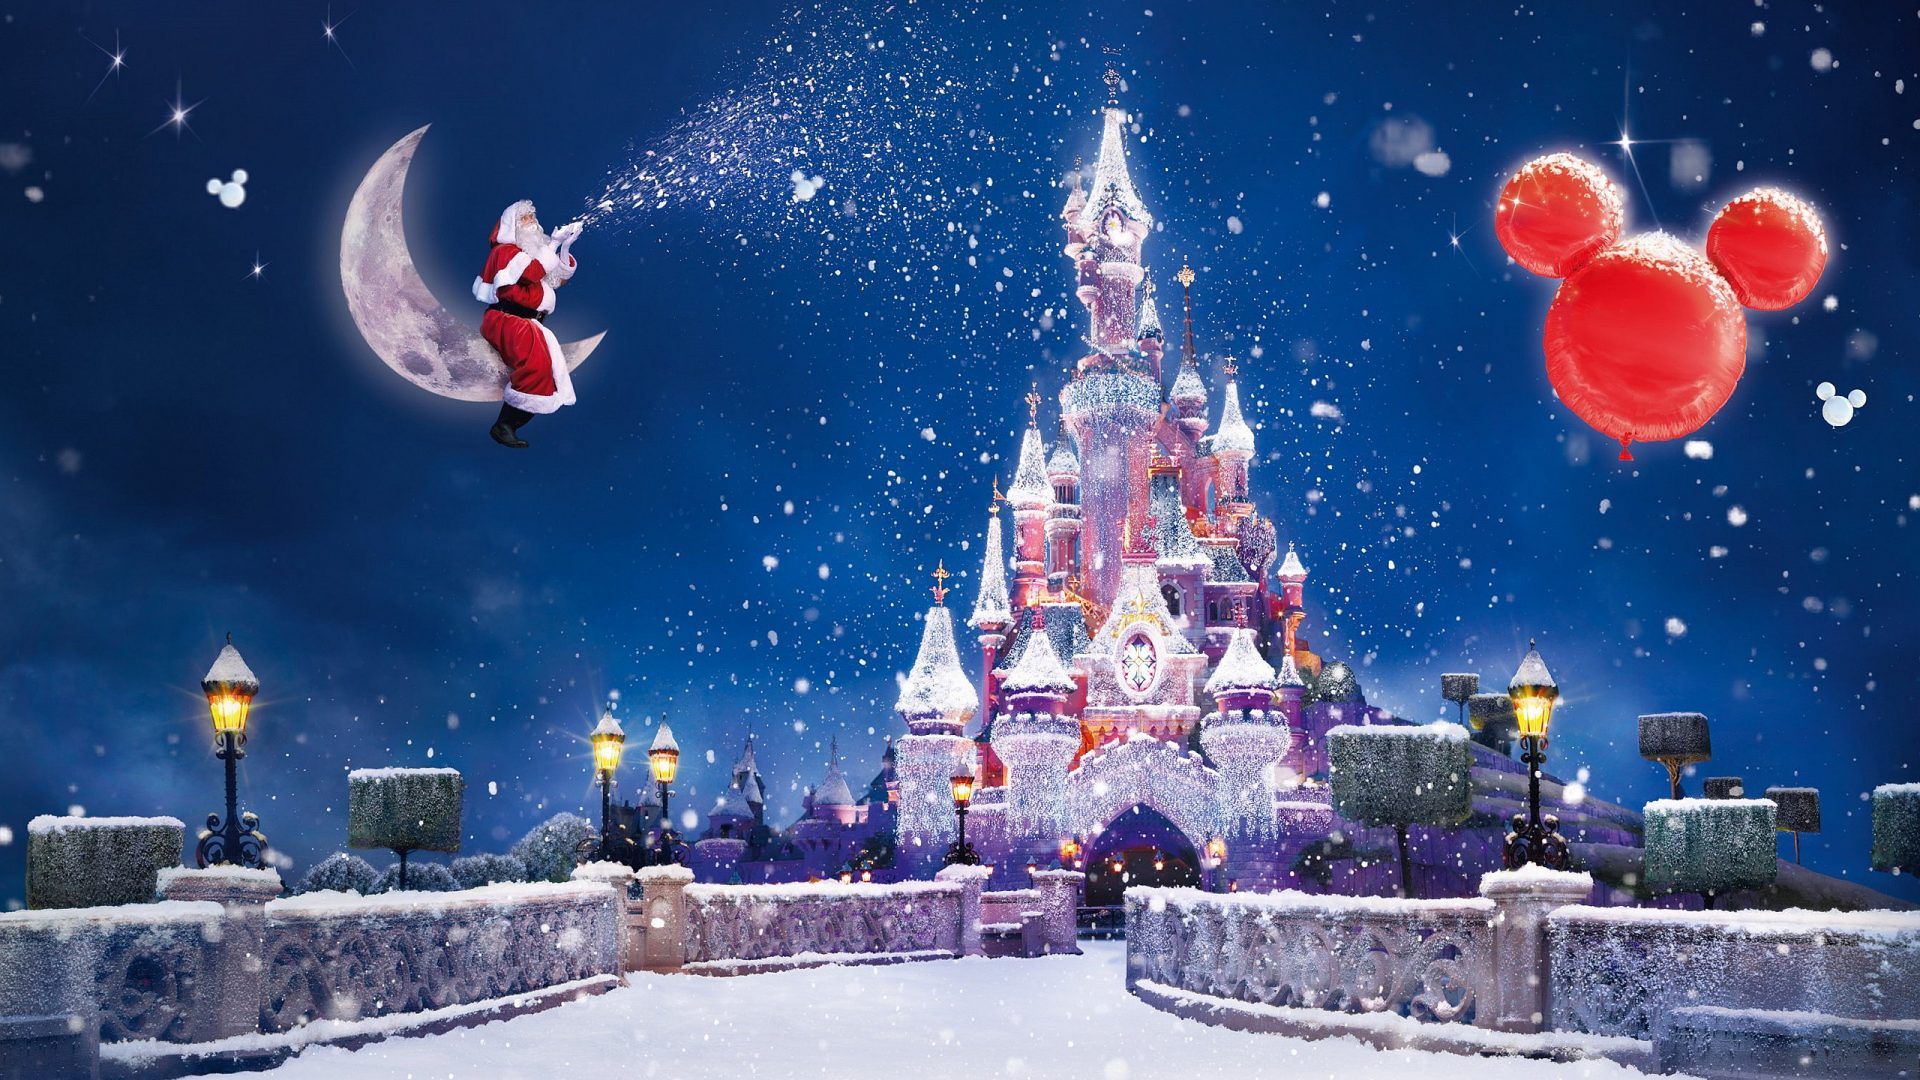 Happy Christmas And New Year Santa Claus In Disney Full HD Wallpaper 2560x1600, Wallpaper13.com